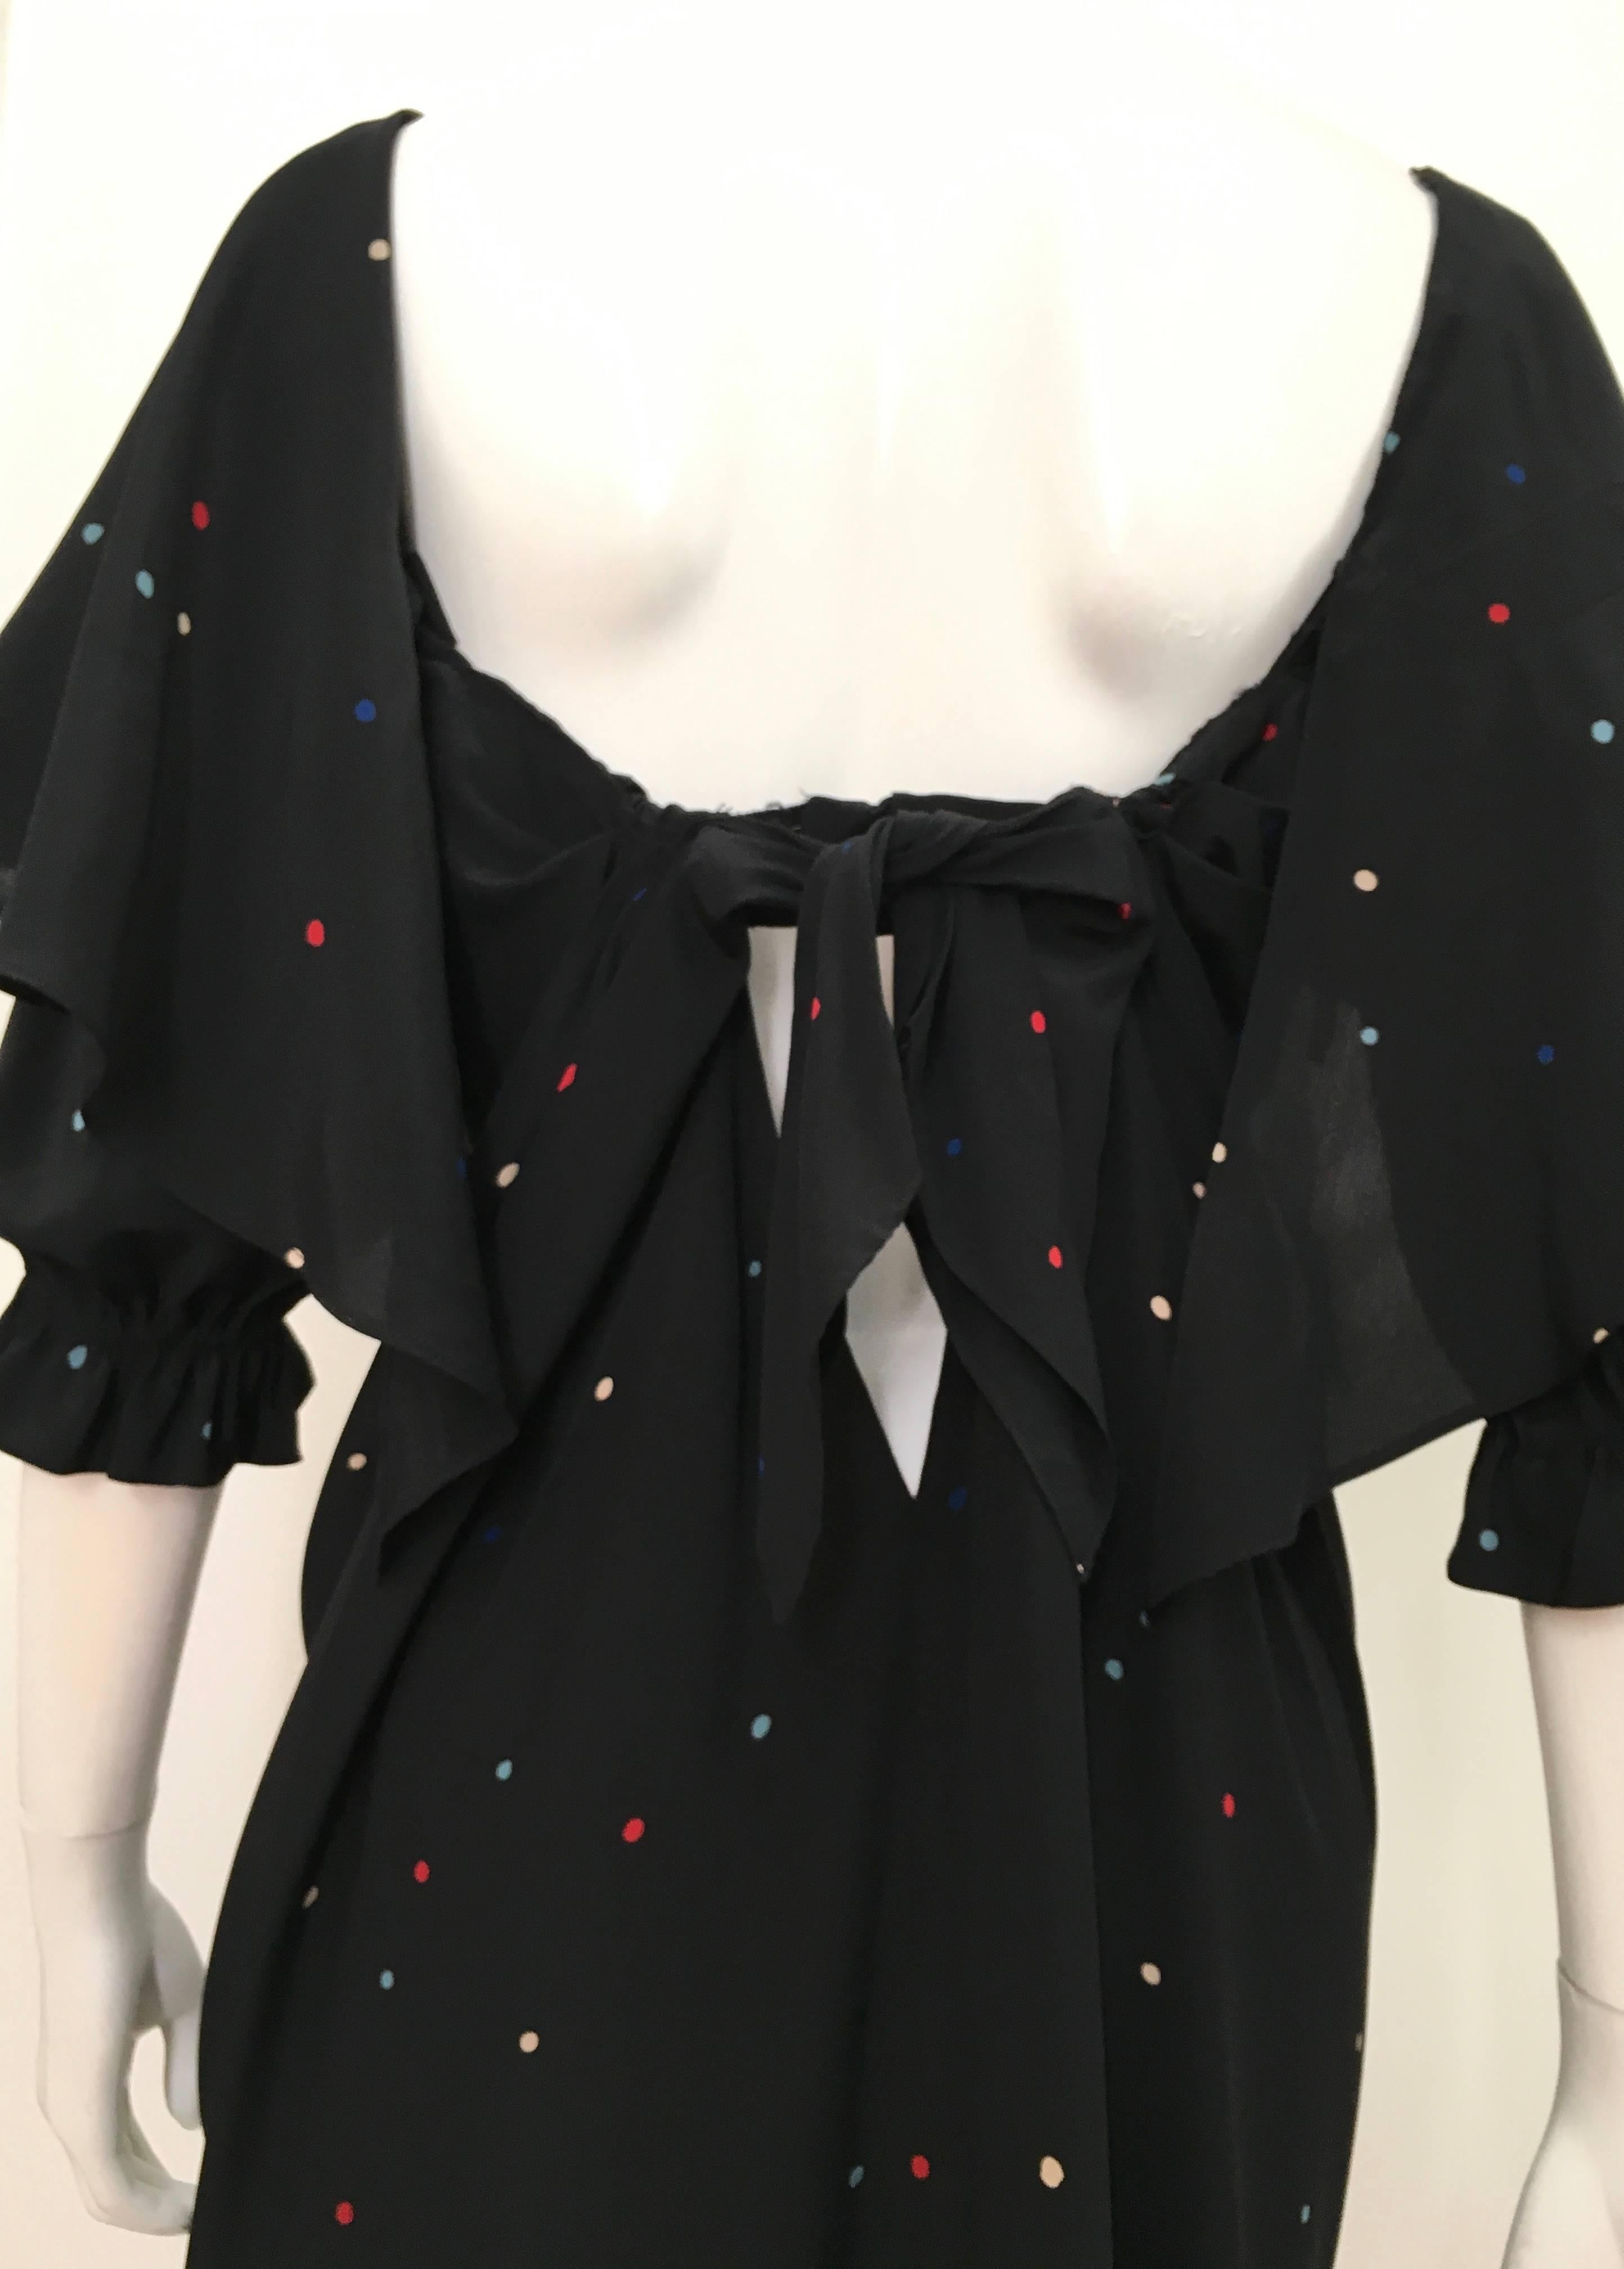 Halston 1970s Black Silk Polka Dot Dress Size 6 / 8. 1